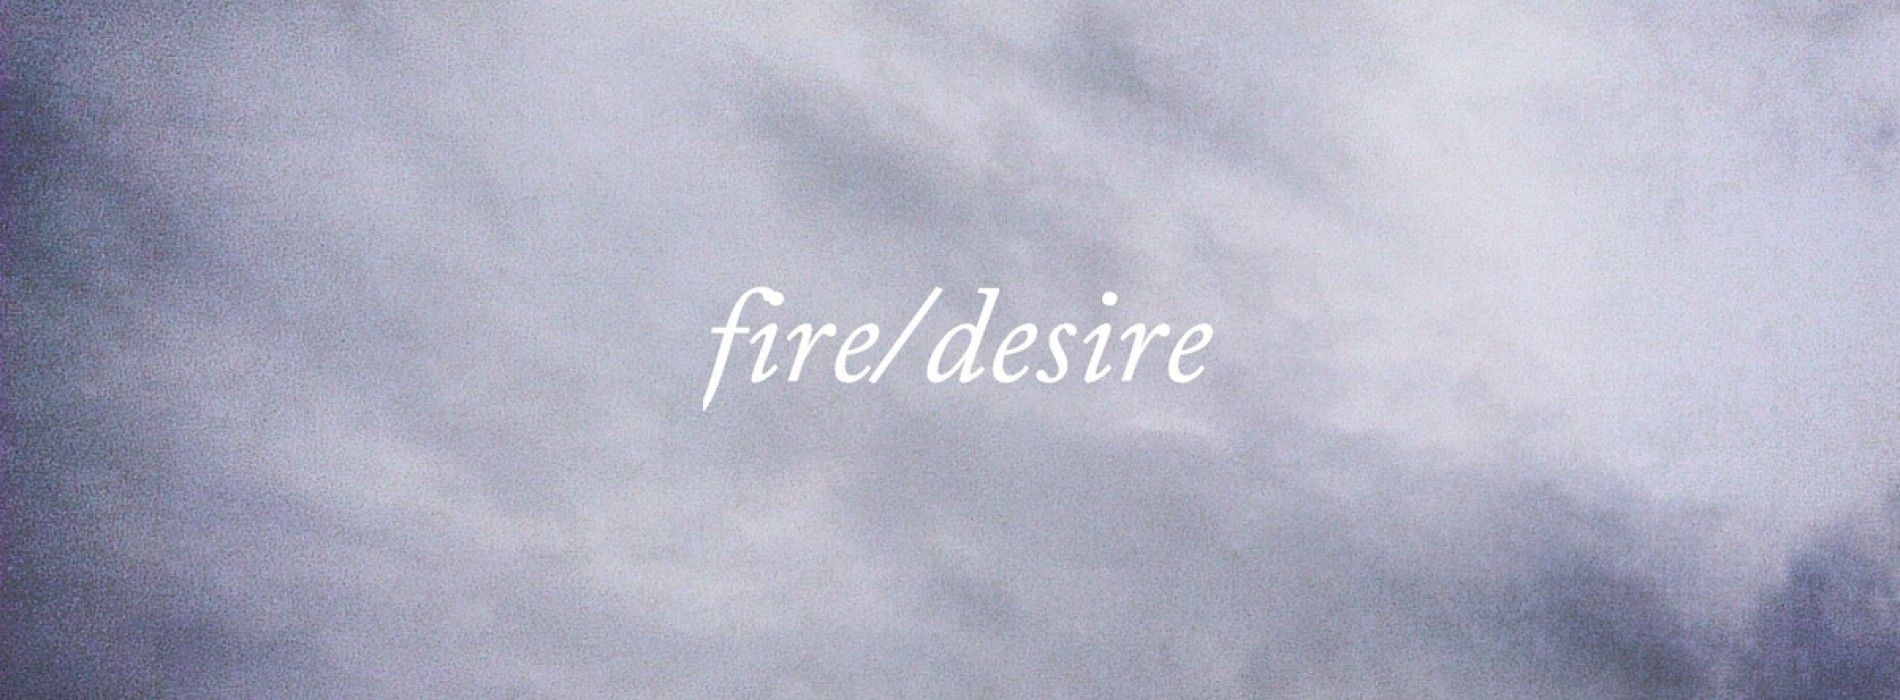 Asela Perera Feat. Aayushi – Fire/Desire